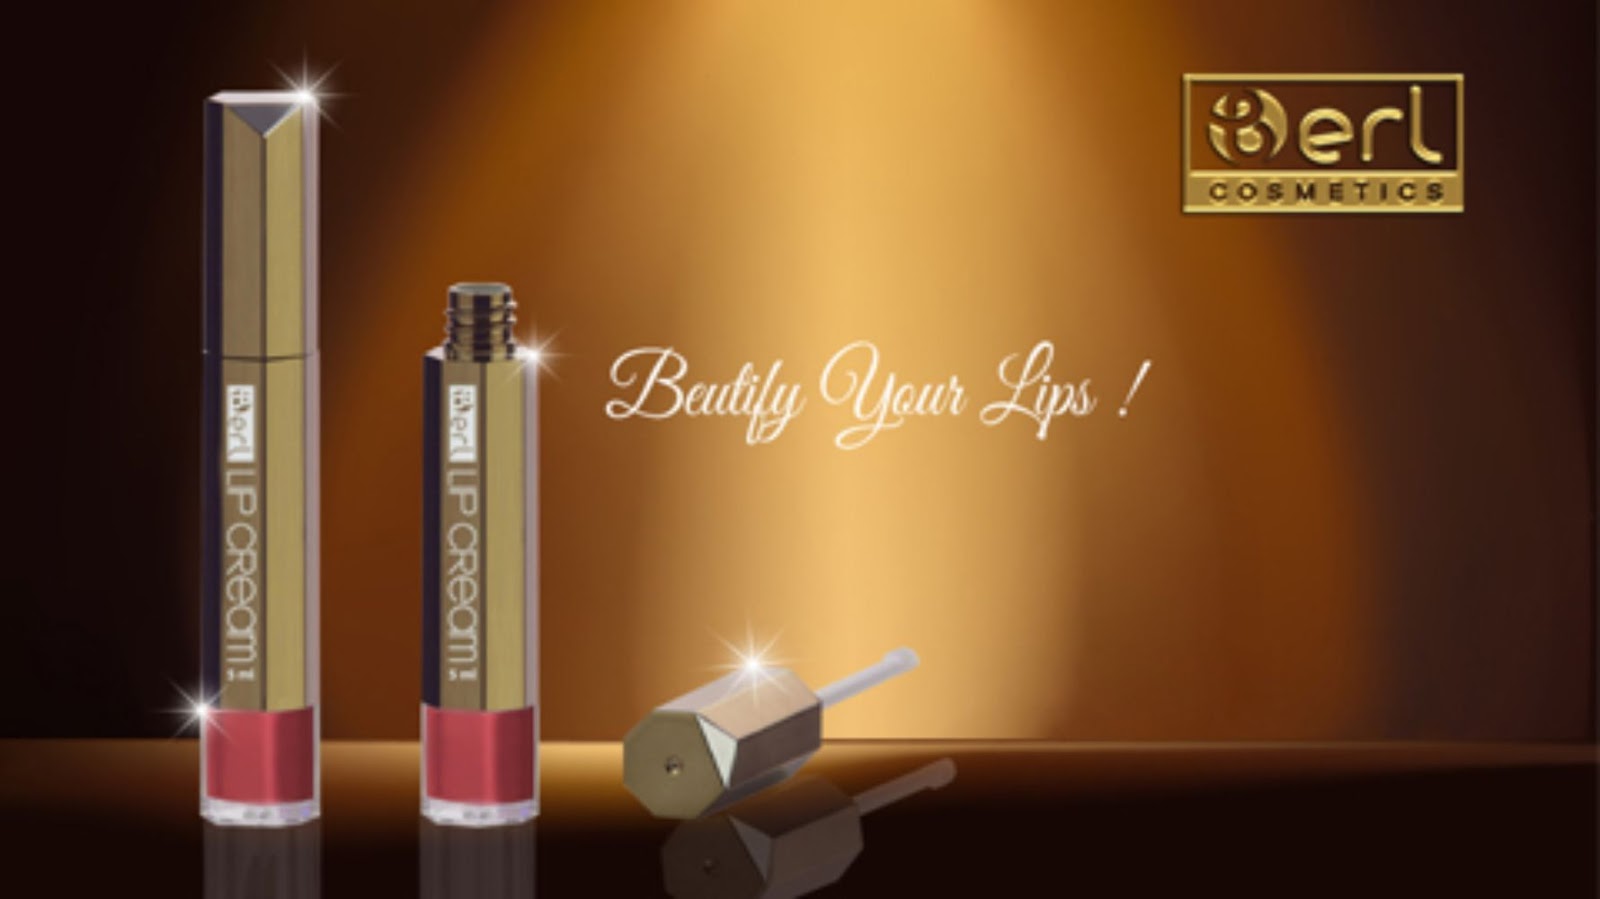 berl-cosmetics-lips-treatment-1